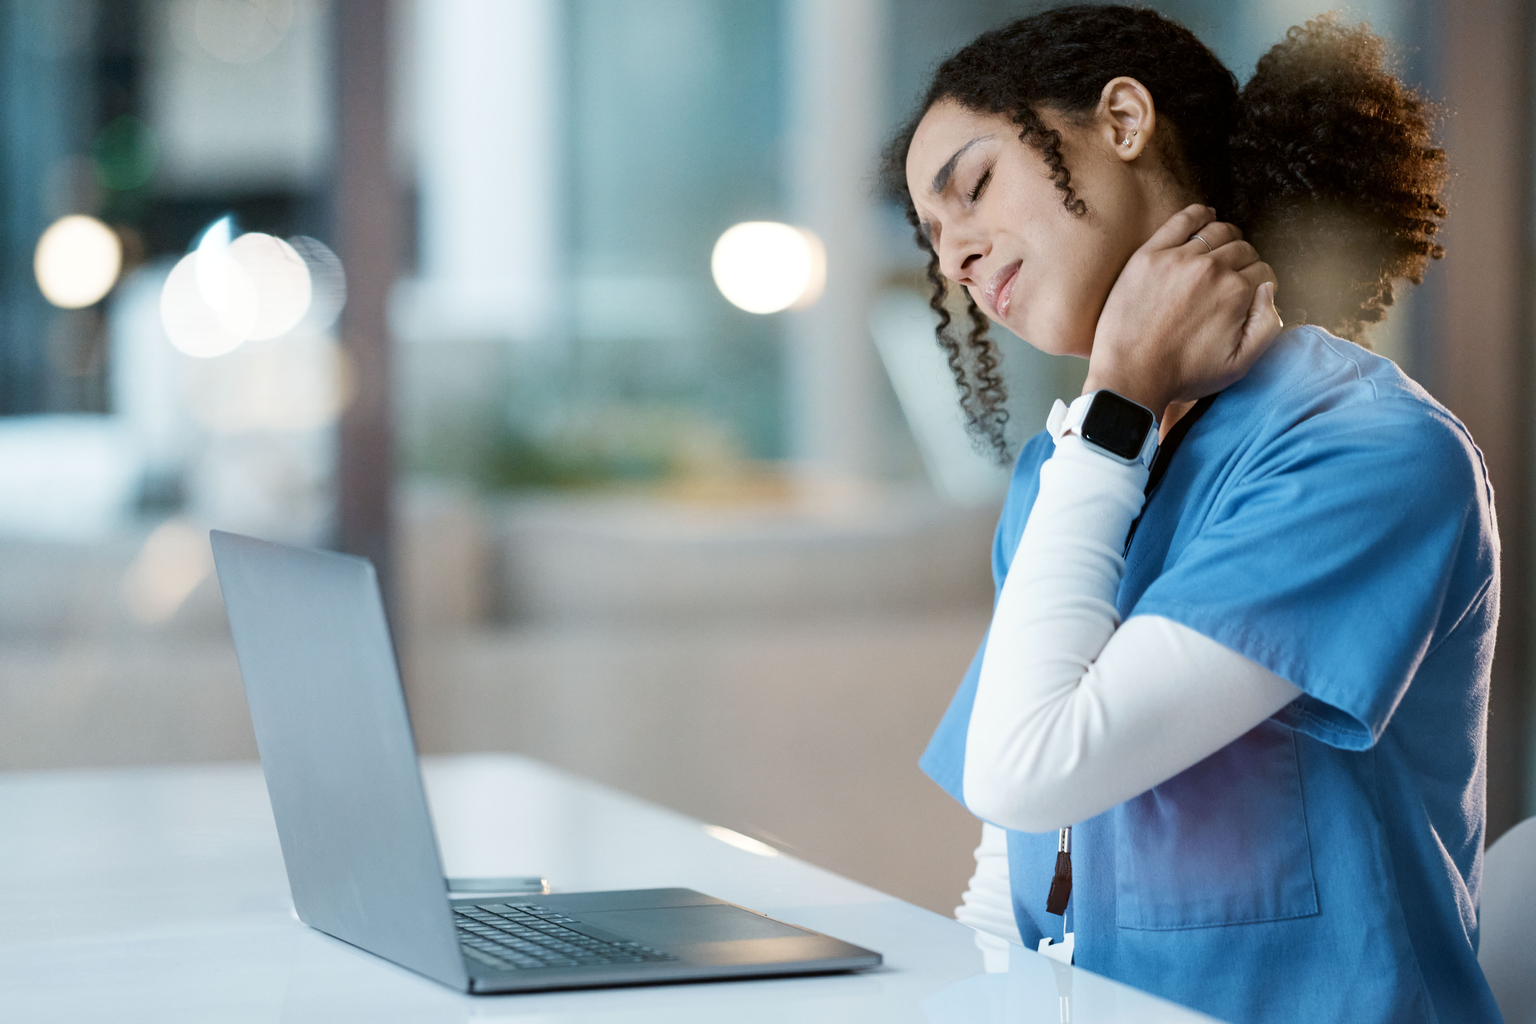 How digital transformation can help address clinician burnout